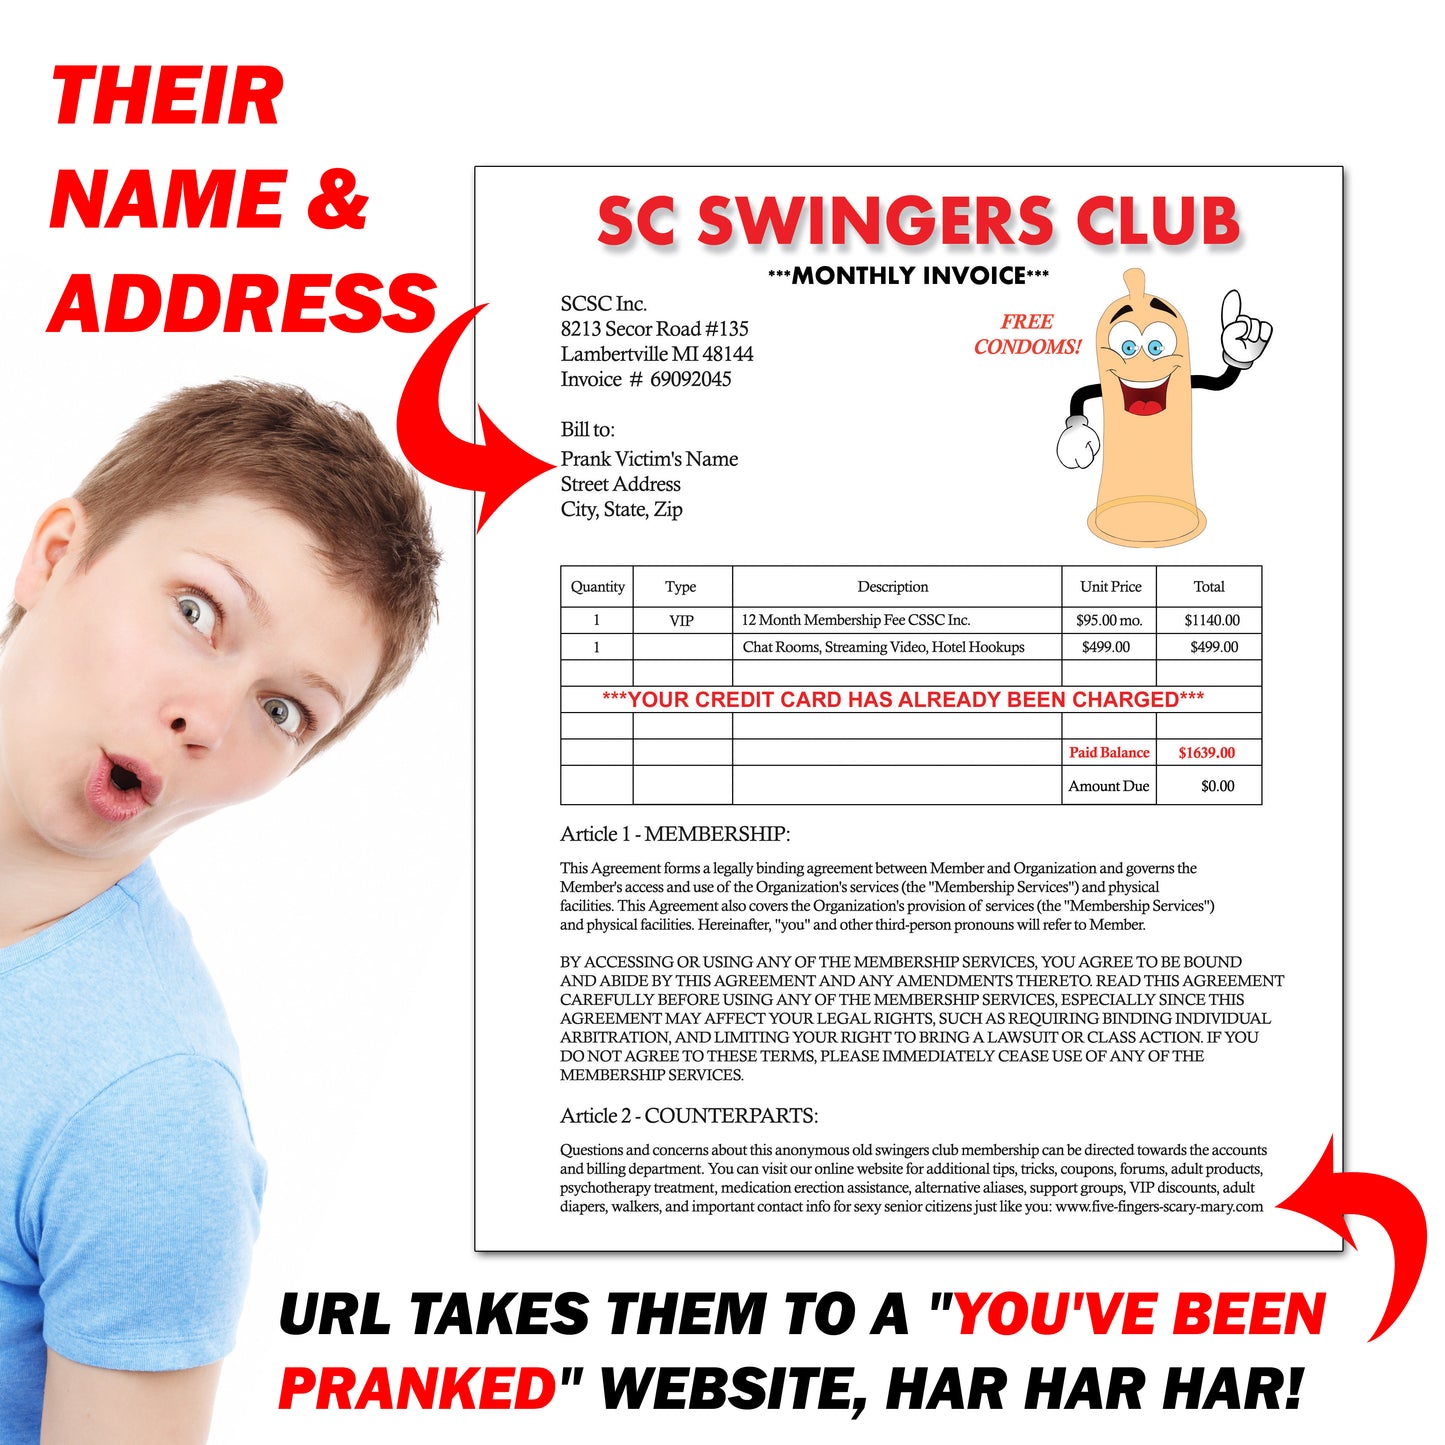 Senior Citizen Swingers Club Anonymous Mail Prank Letter